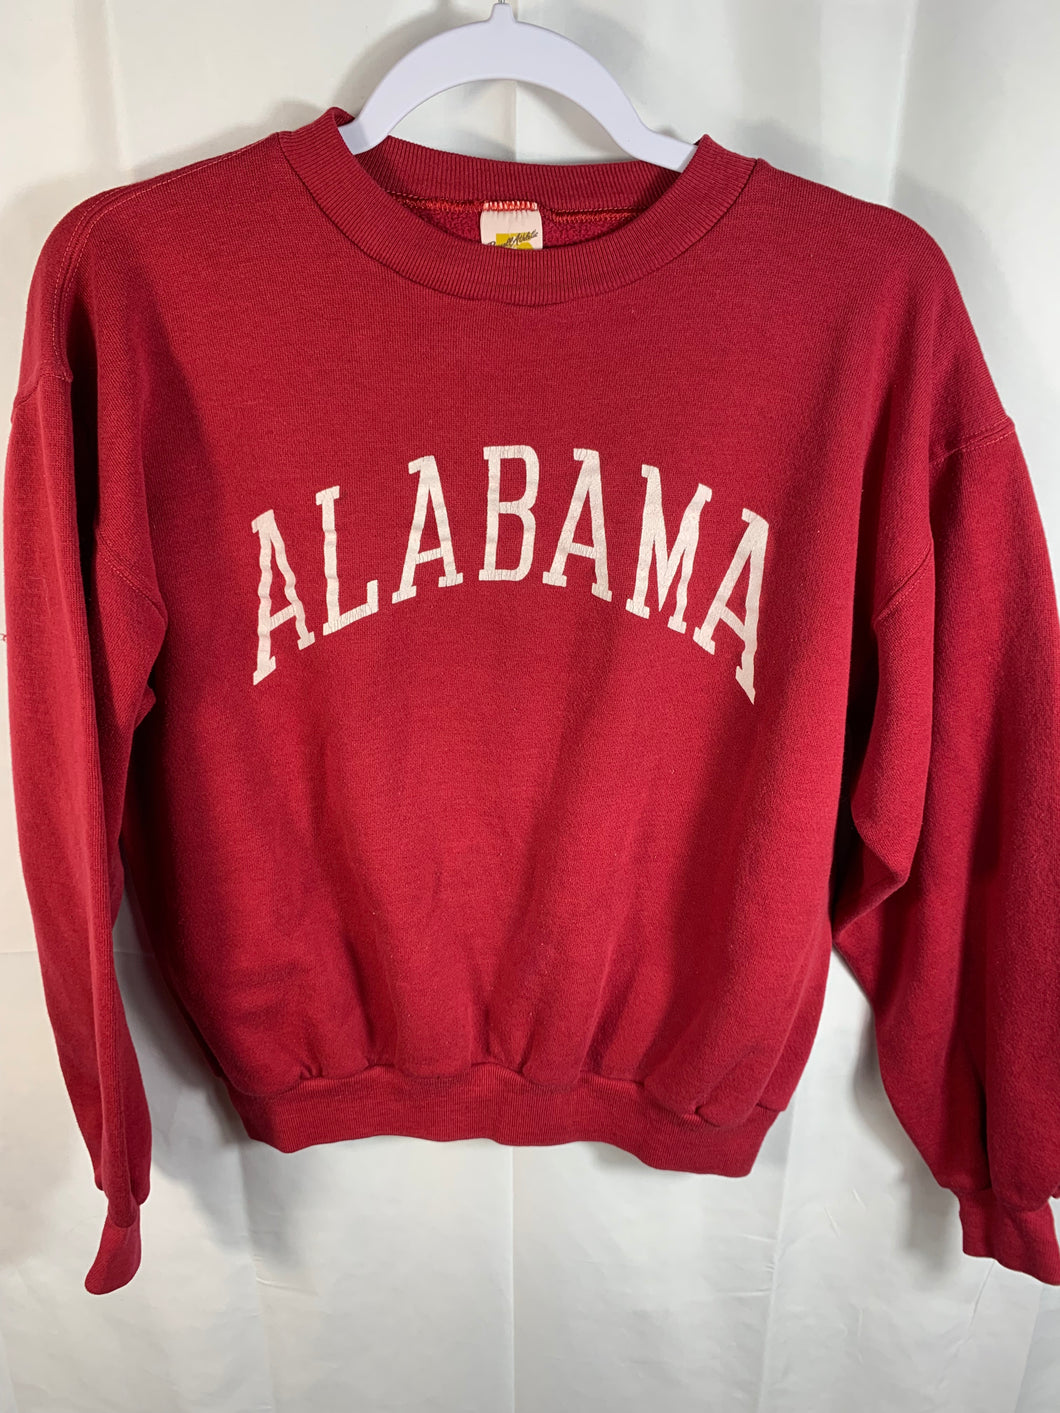 1970’s Alabama Spellout Russell Sweatshirt Medium